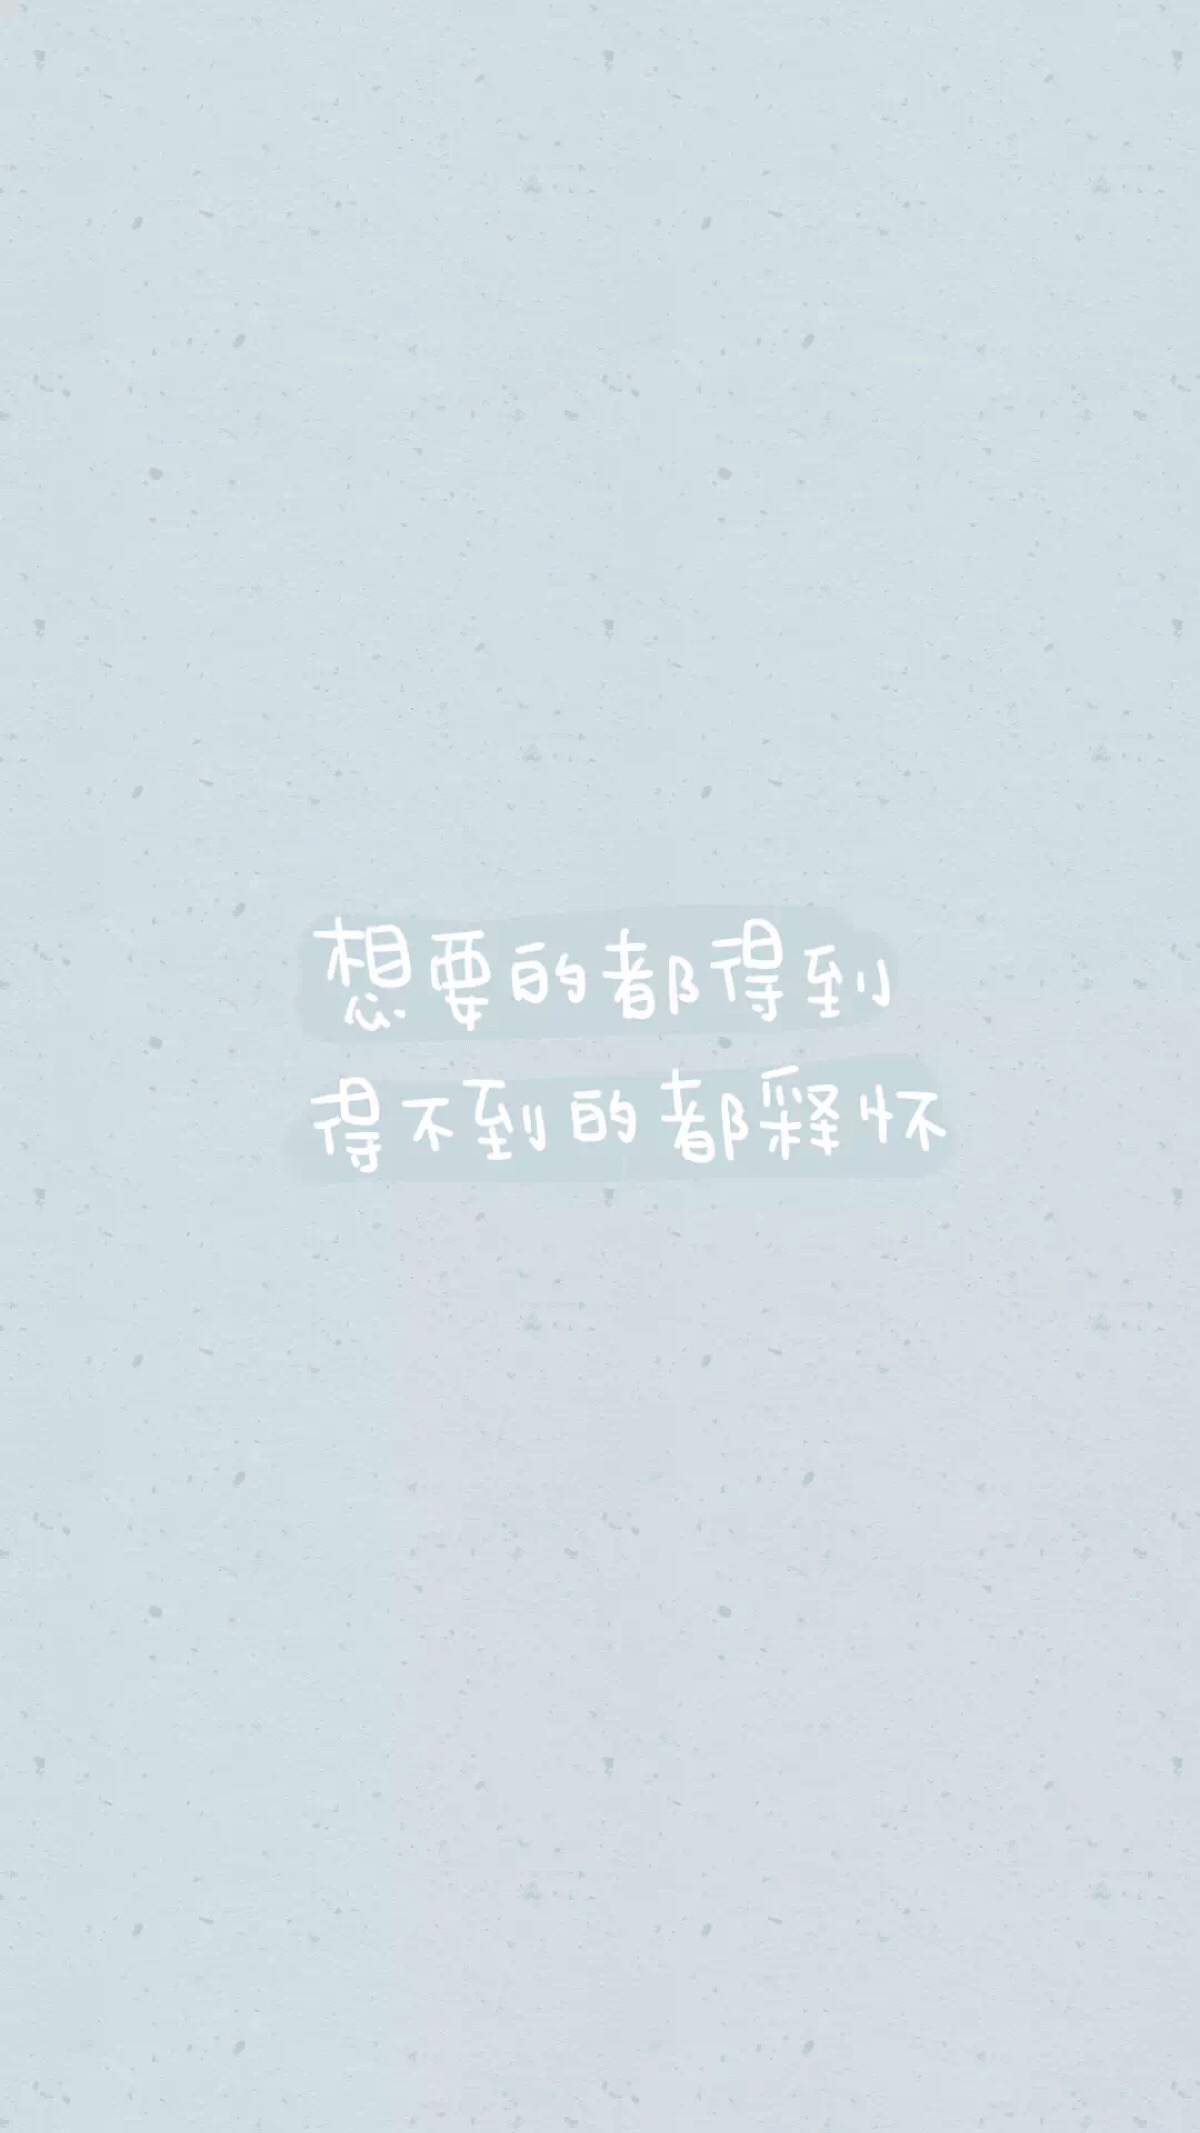 from晚安荼蘼 手写句子 文字壁纸 锁屏